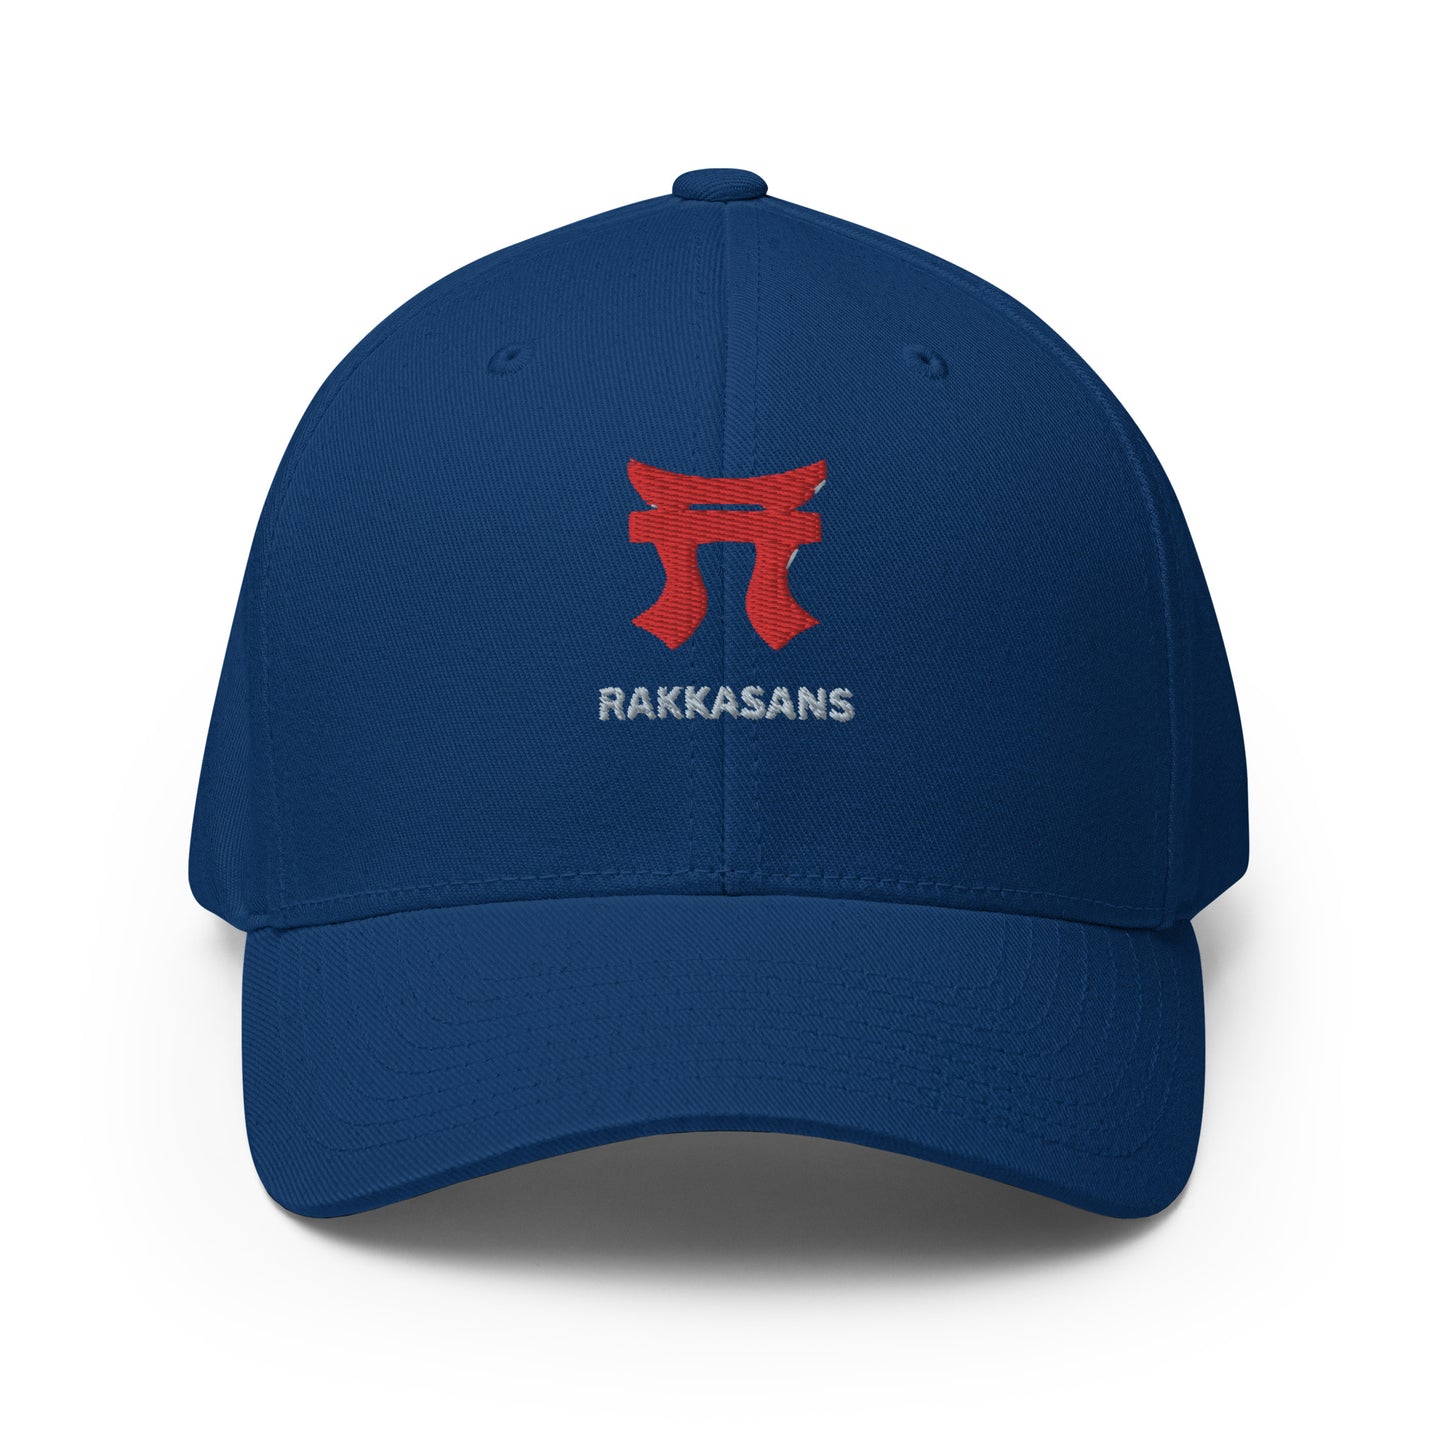 Rakkgear "Rakkasans" Blue Embroidered Fitted Baseball Cap: Multicam black cap with iconic Rakkasans Logo embroidery on the